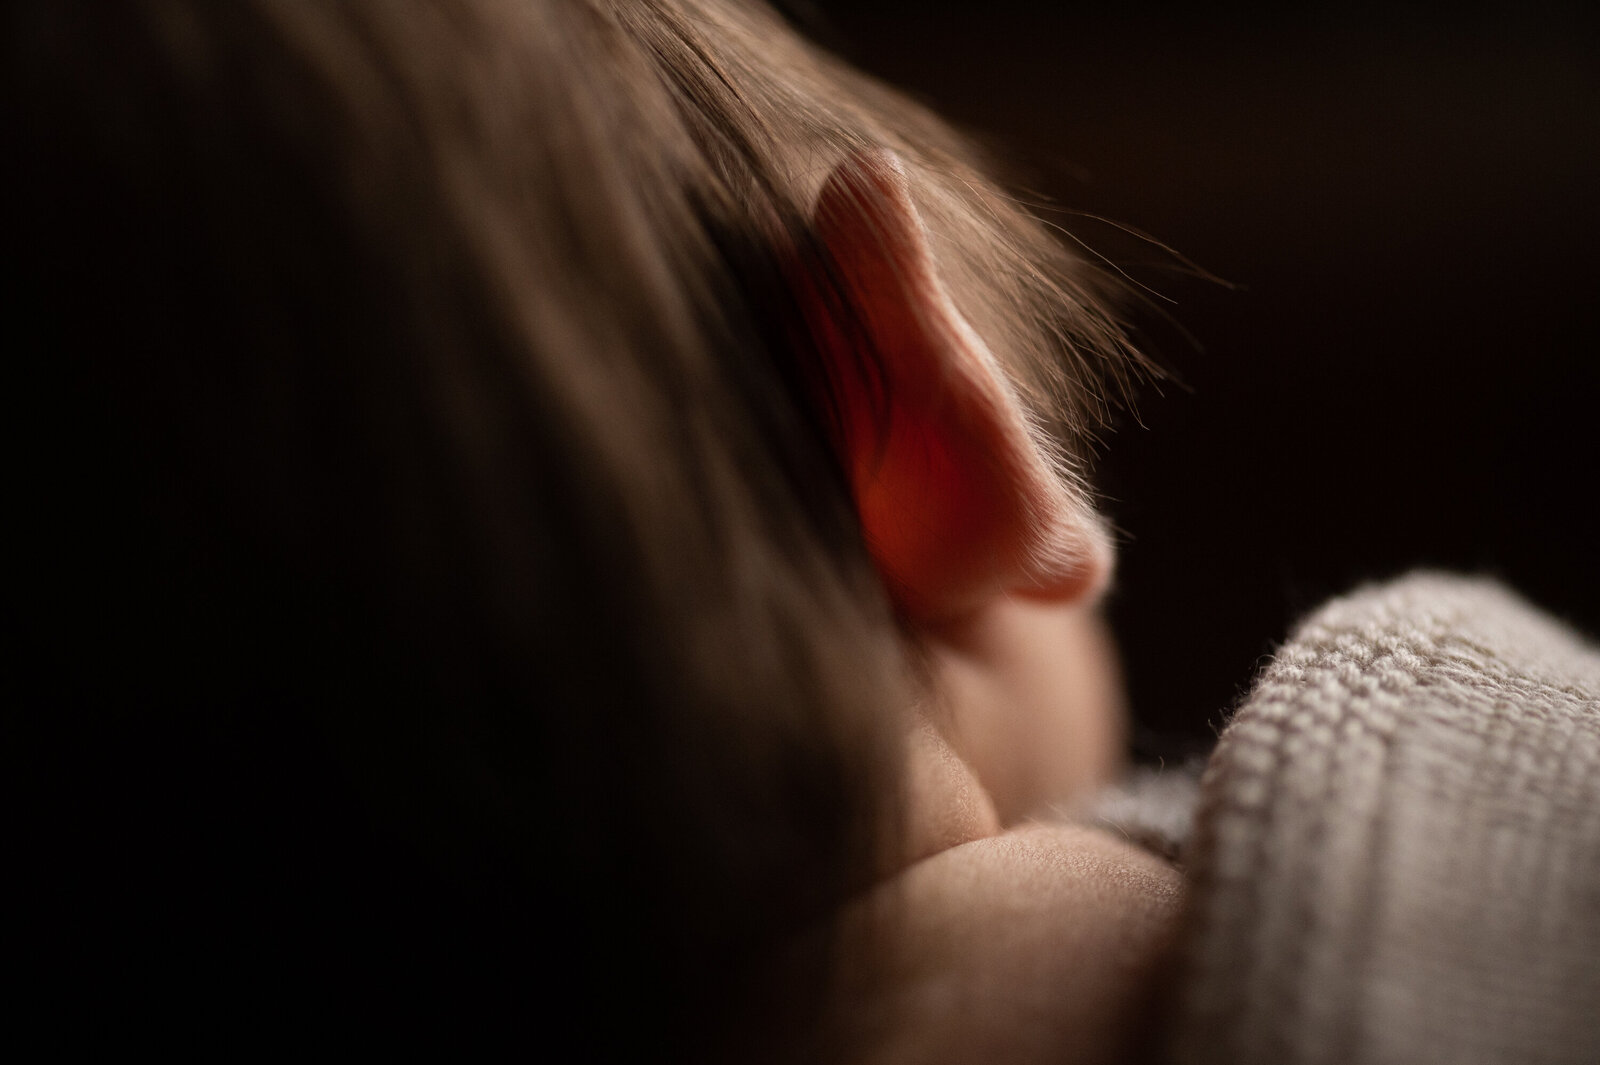 Close up of a newborn baby ear.